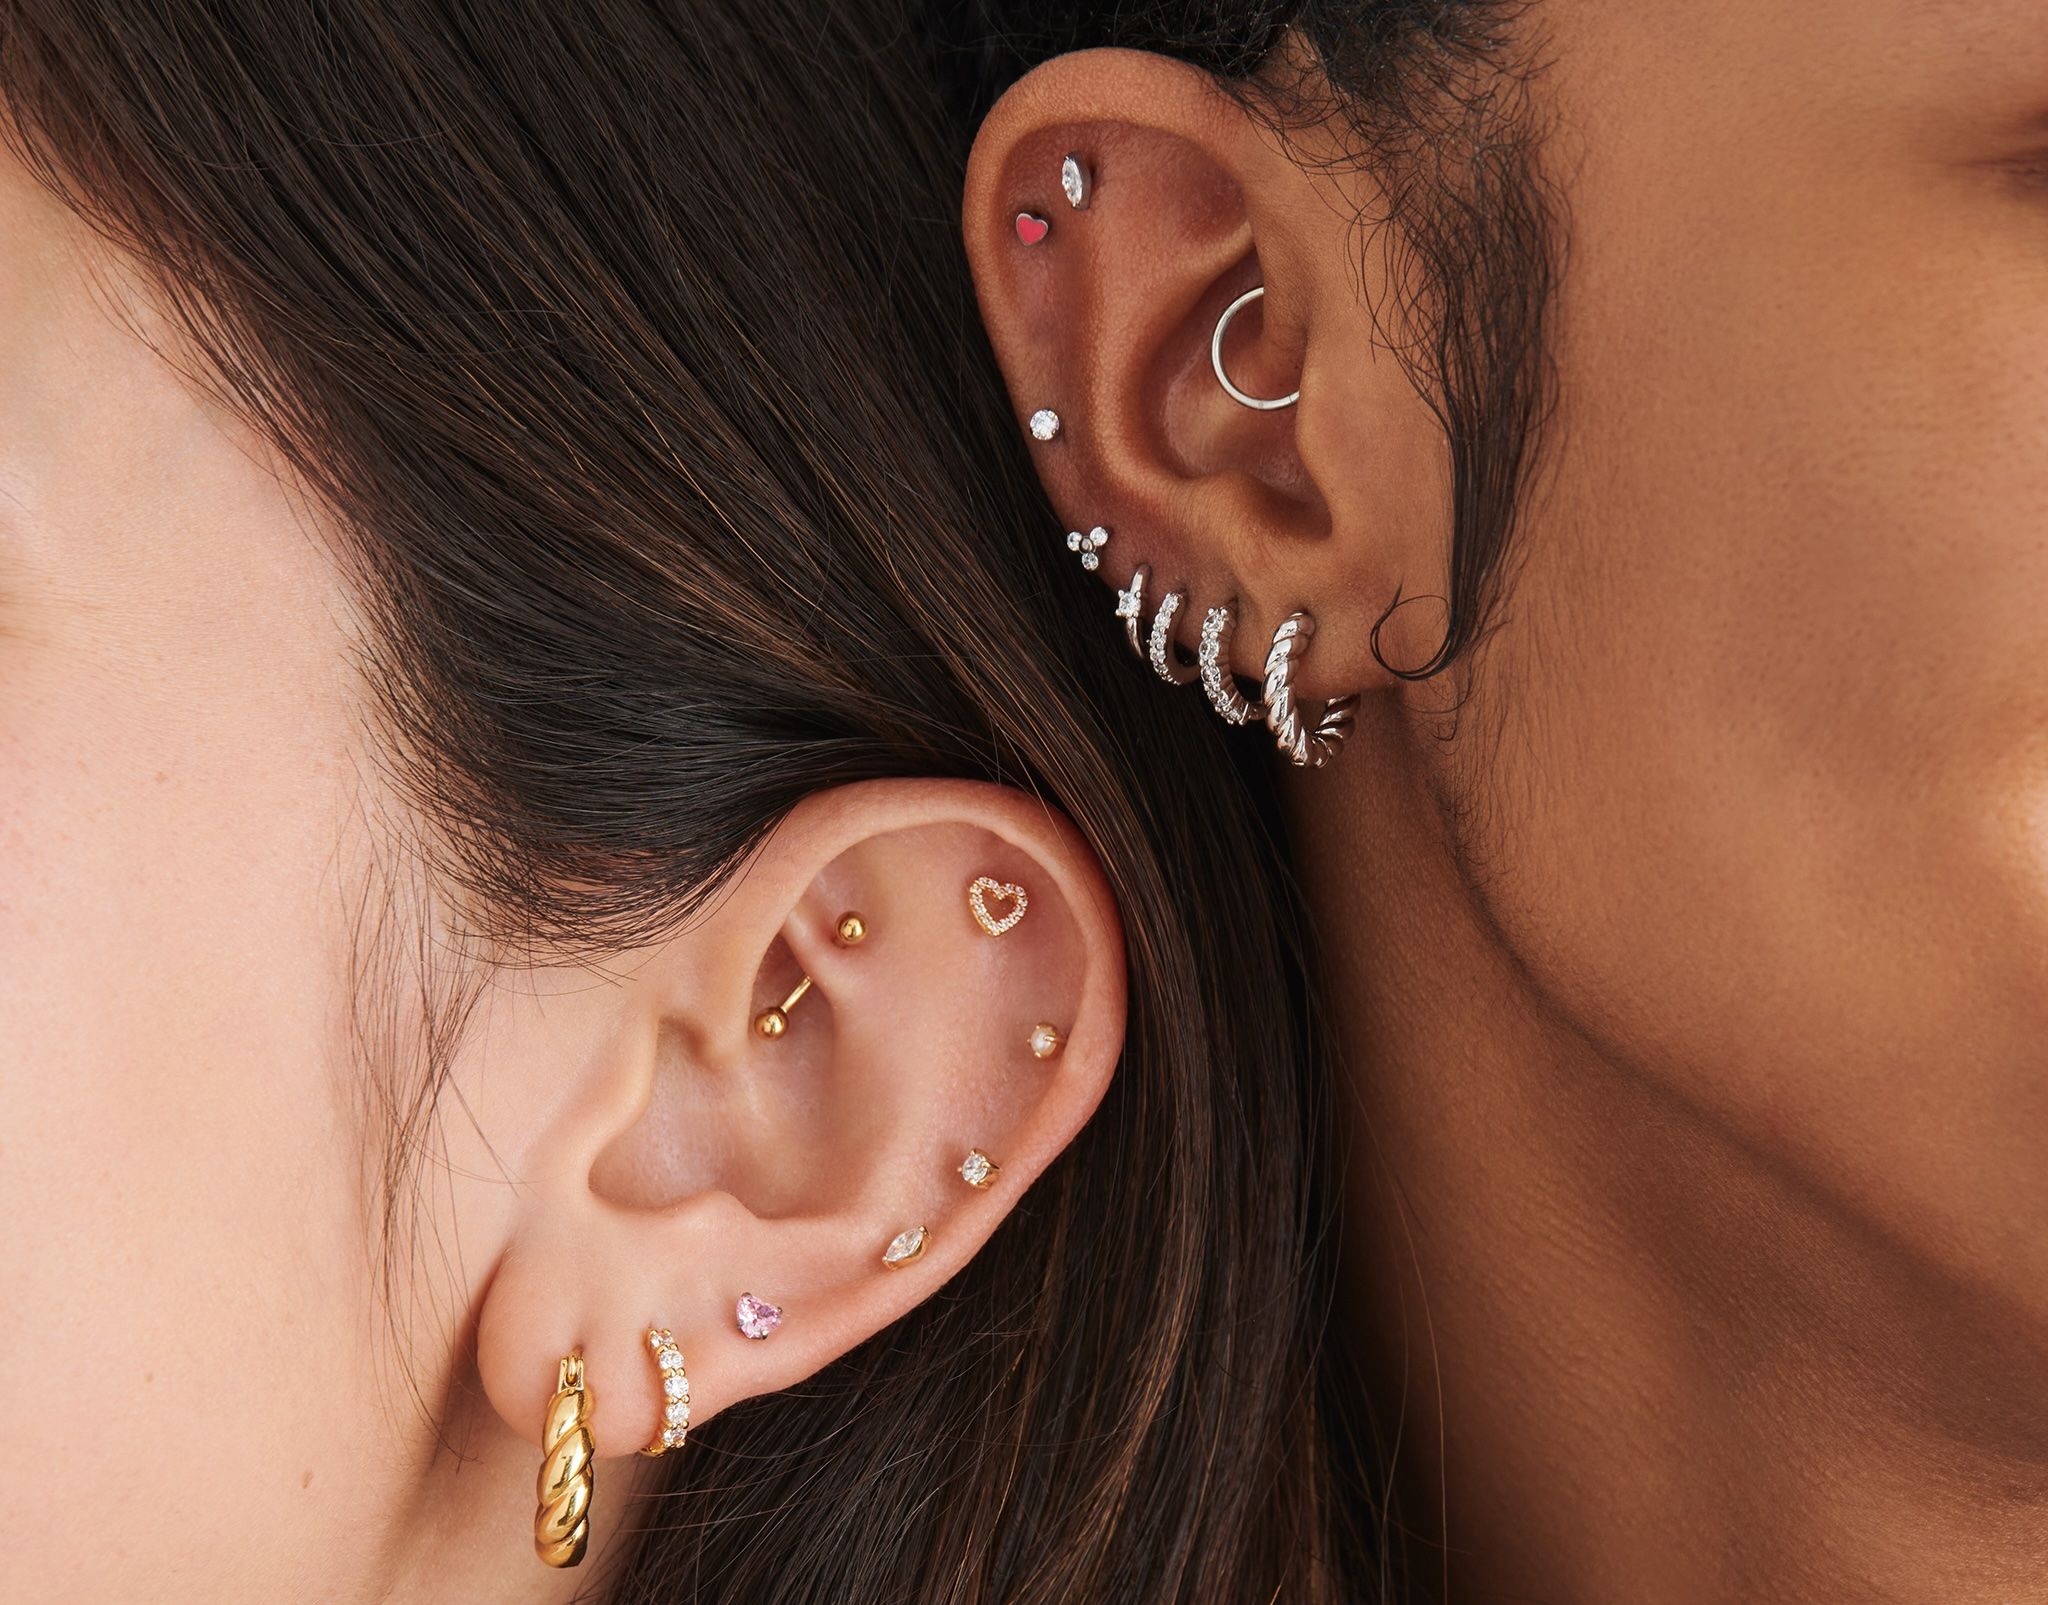 Two ears with multiple earrings in them.